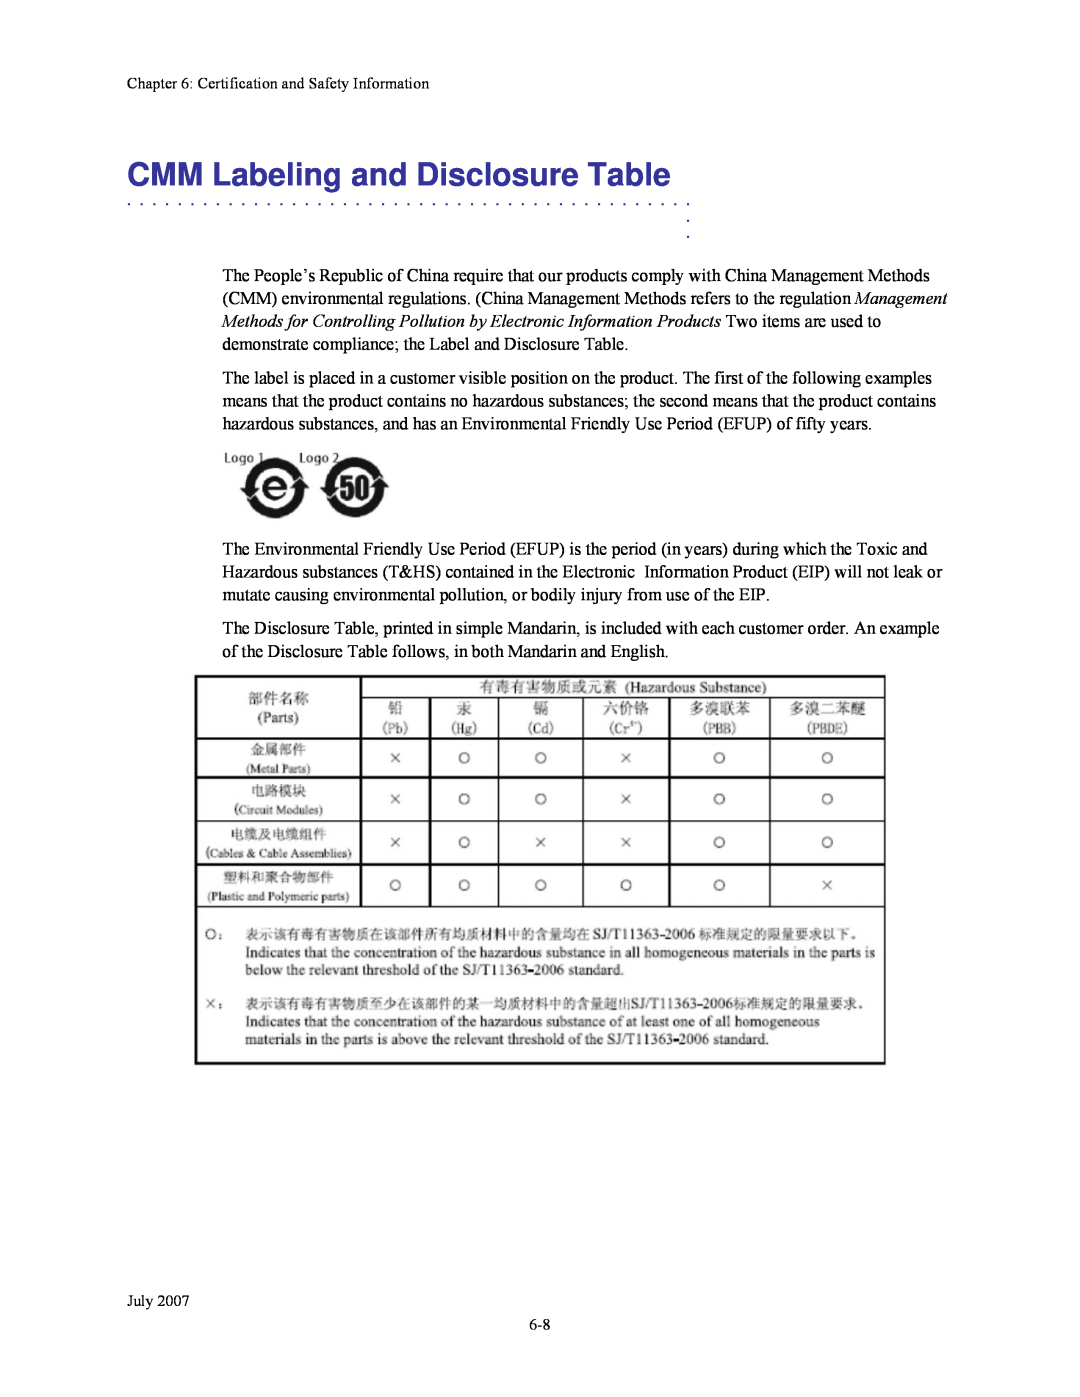 Nikon 4300 manual CMM Labeling and Disclosure Table 